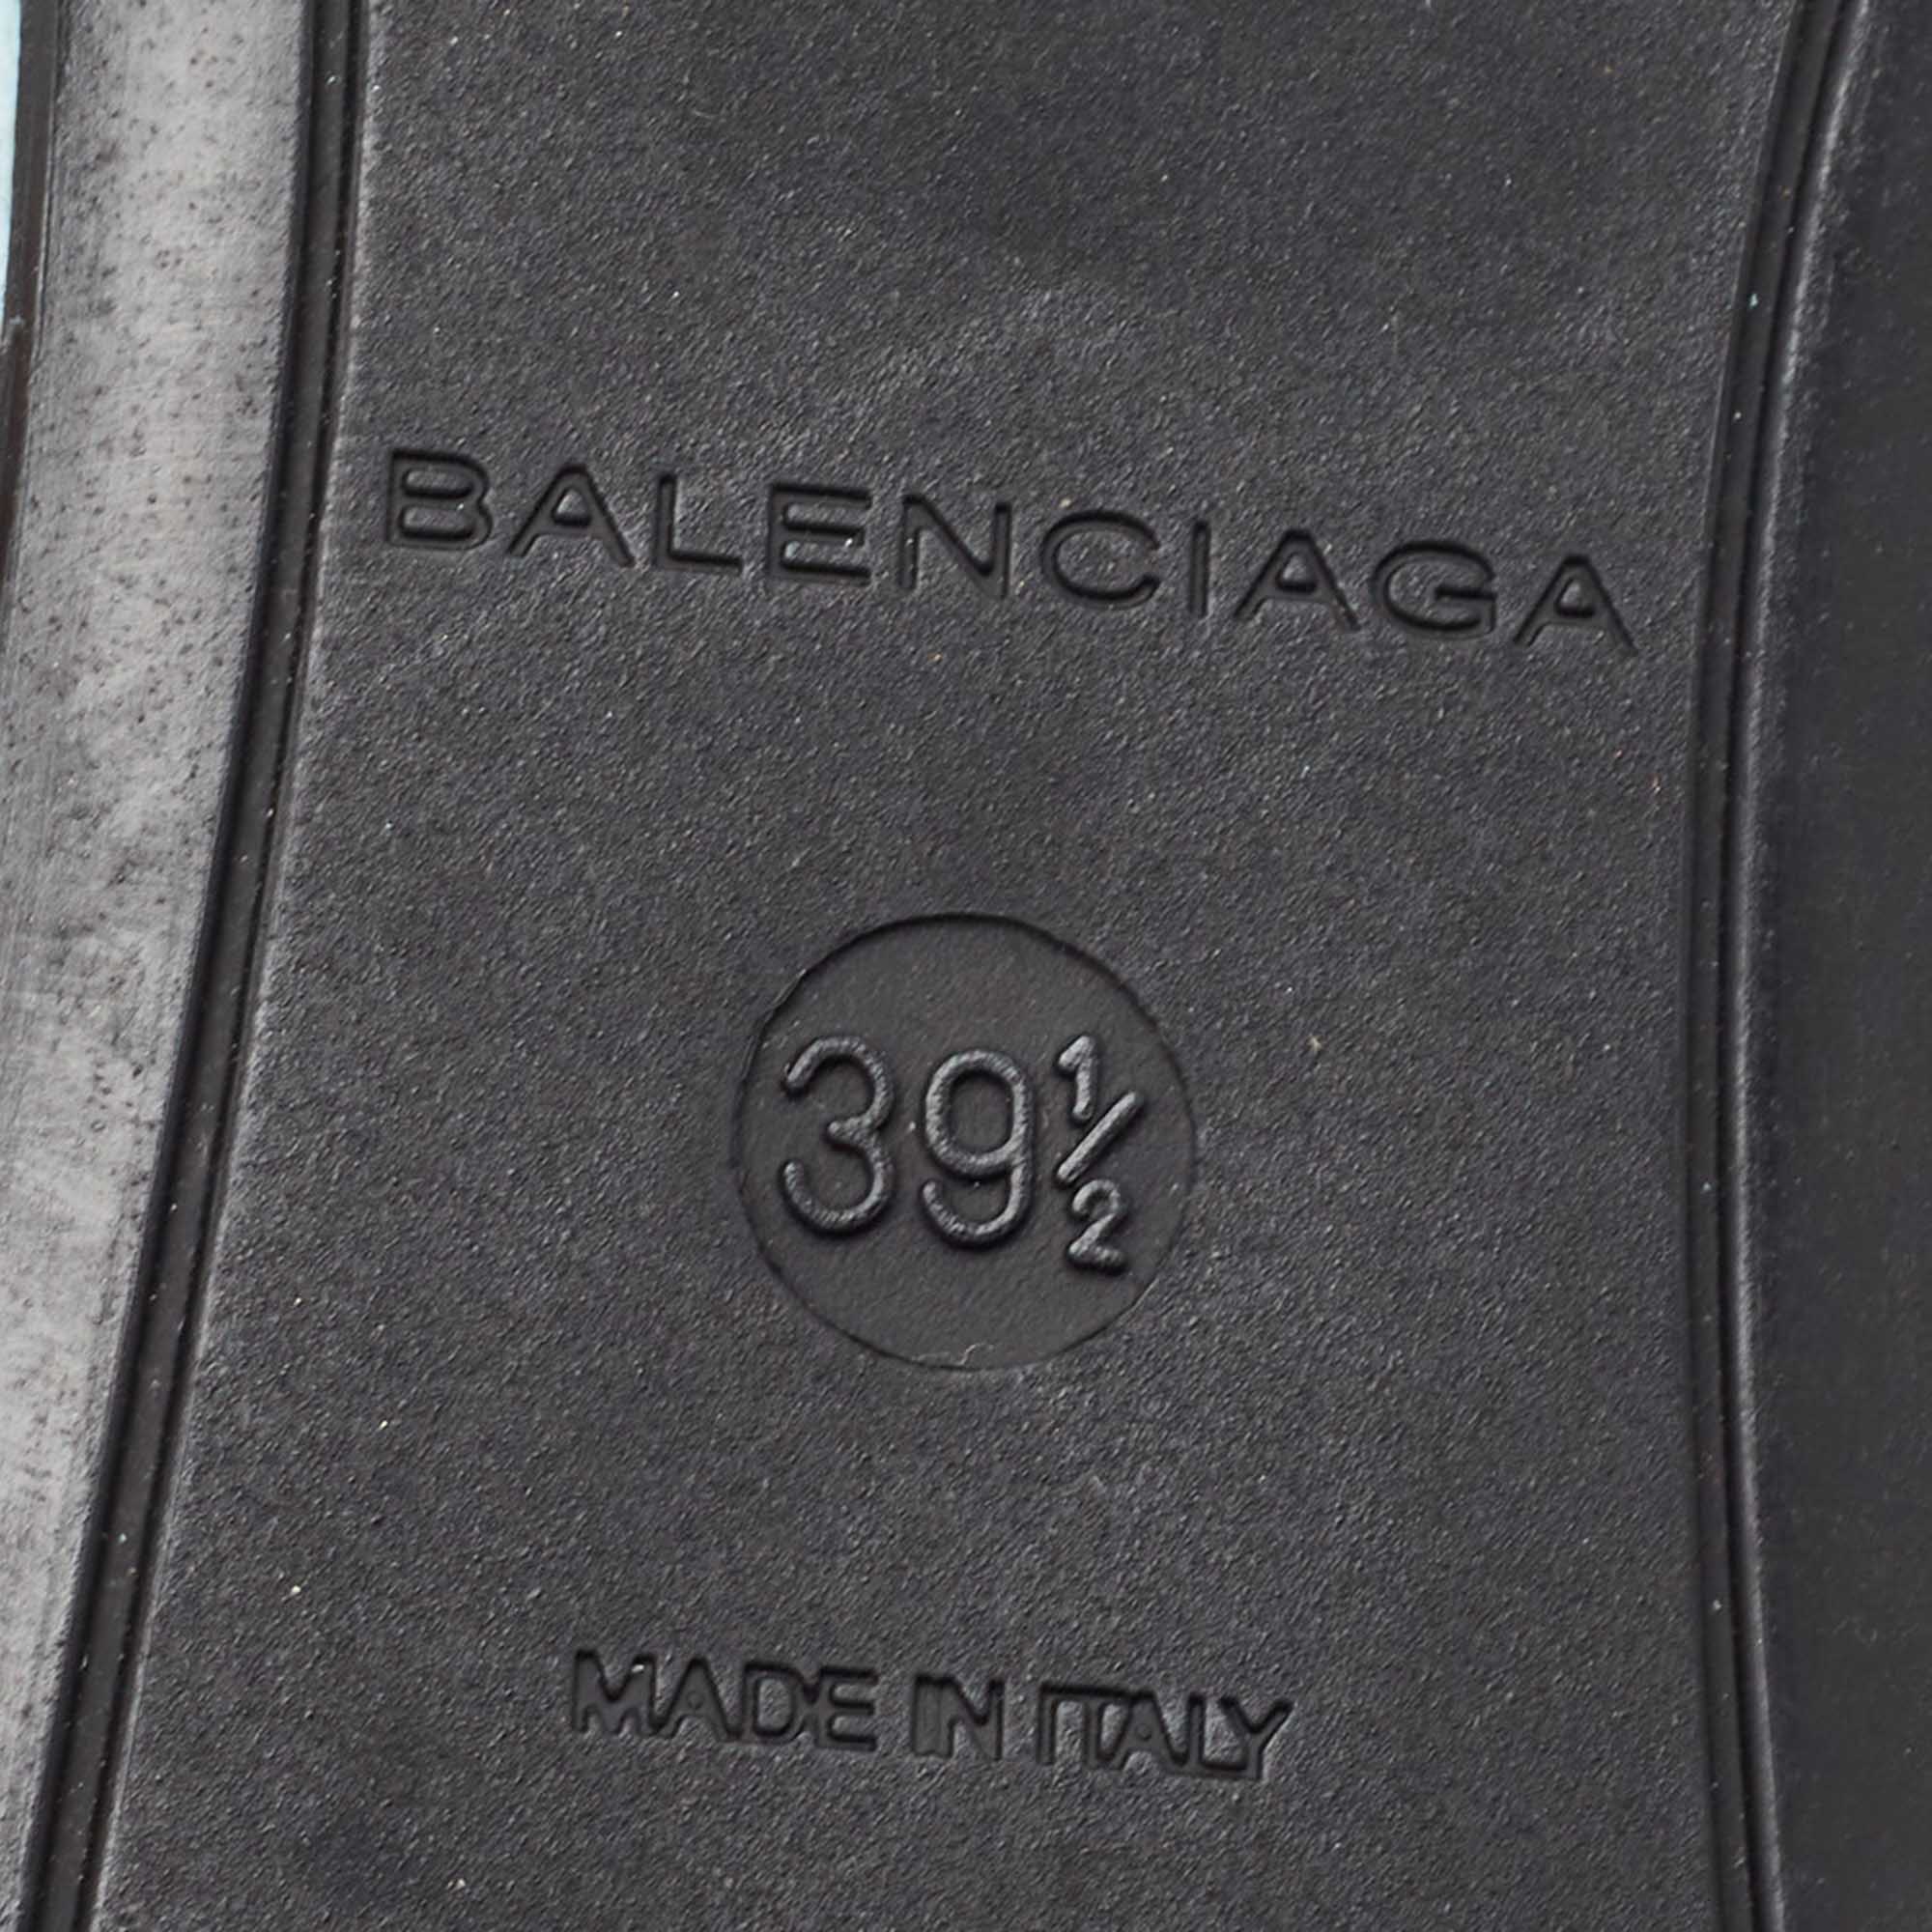 Balenciaga Light Blue Textured Leather Studded Arena Ballet Flats Size 39.5